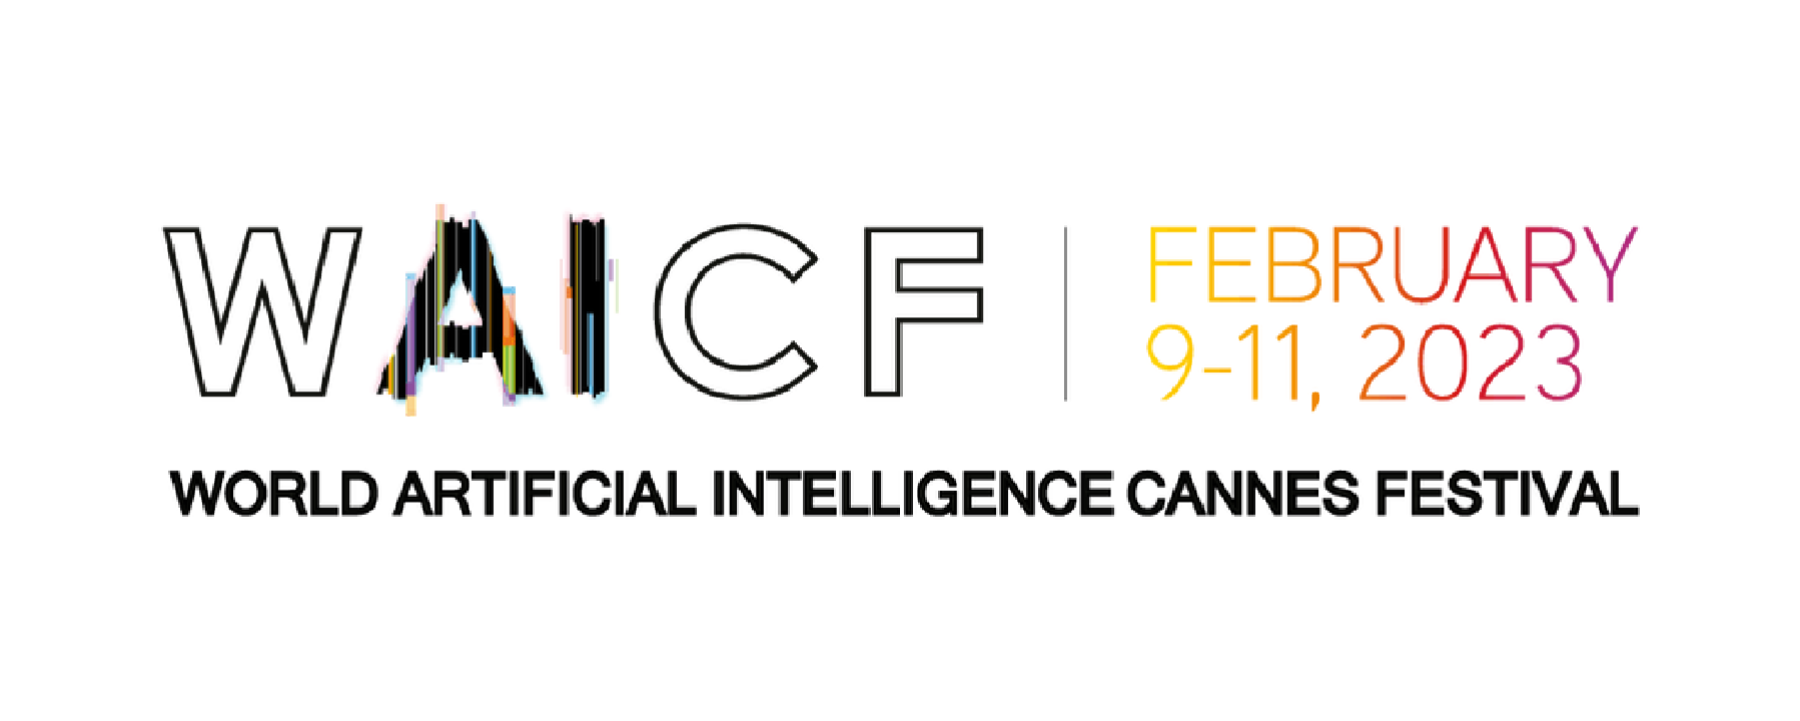 The World AI Cannes Festival